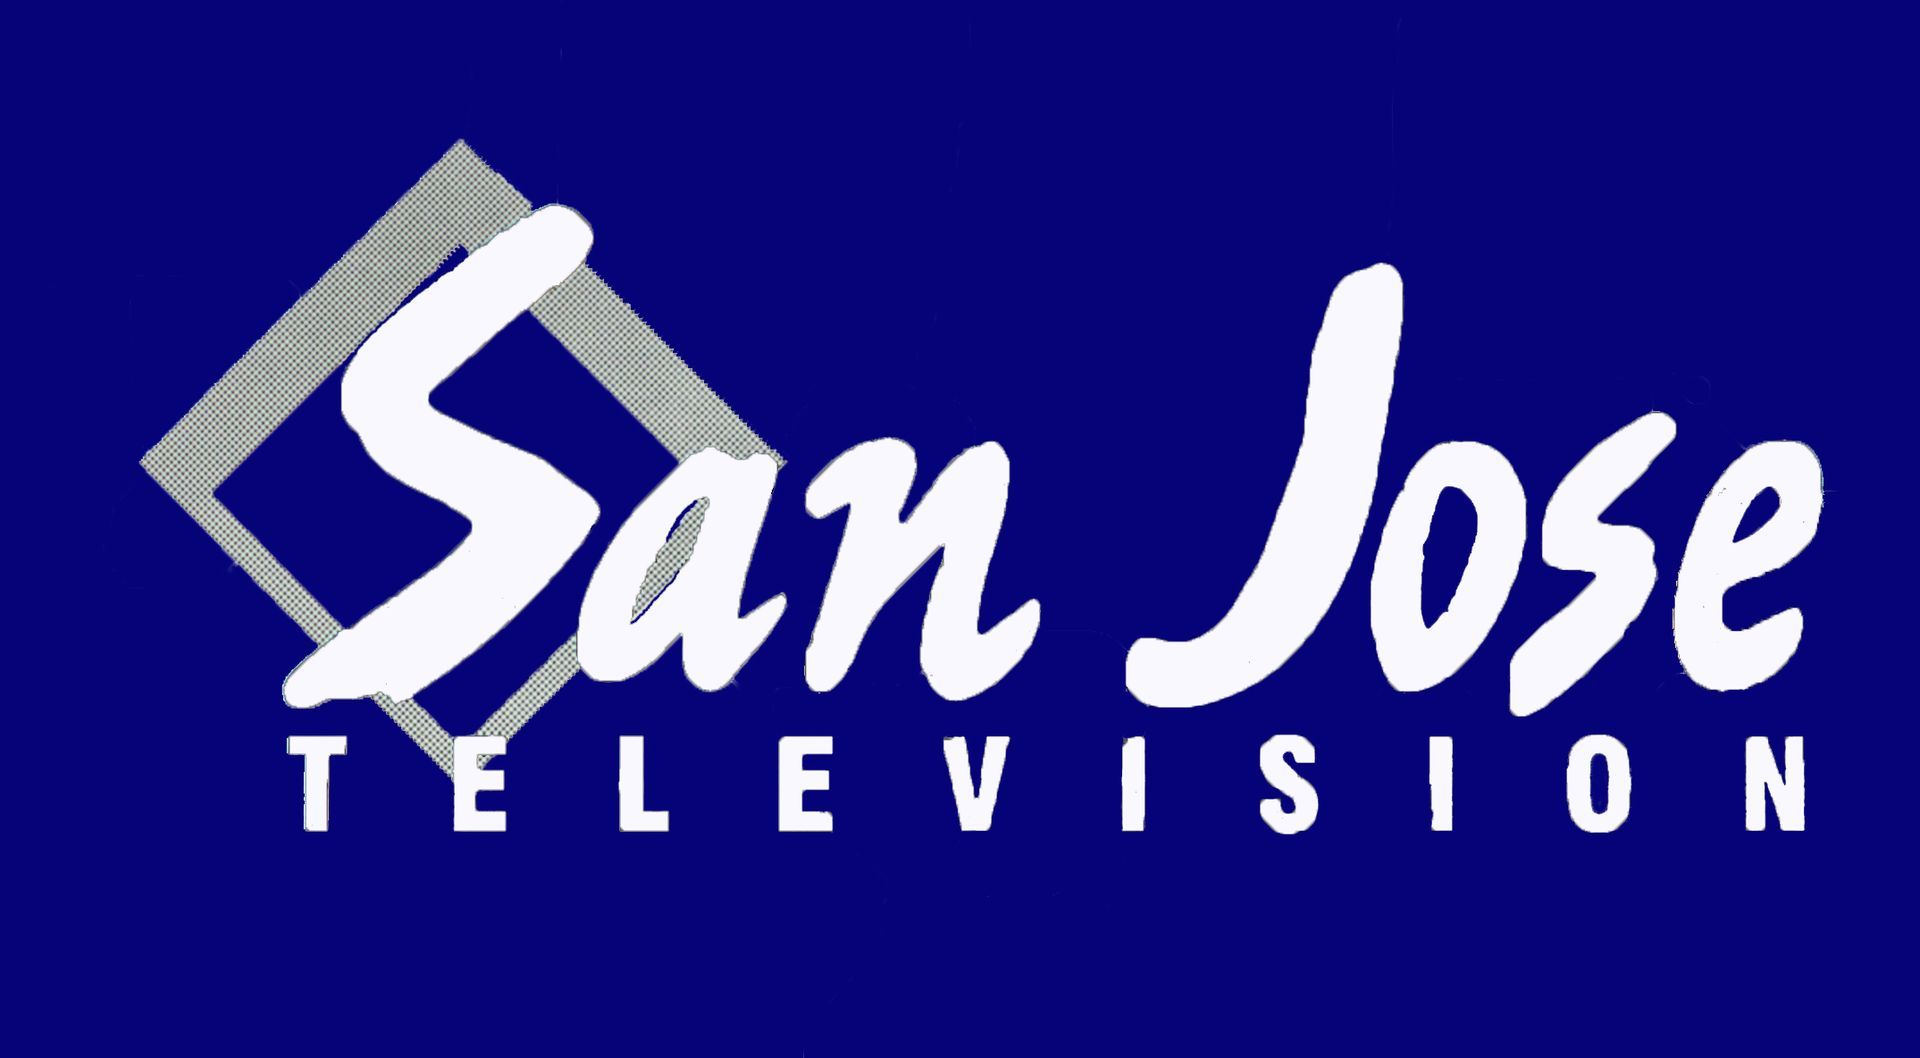 San Jose Television